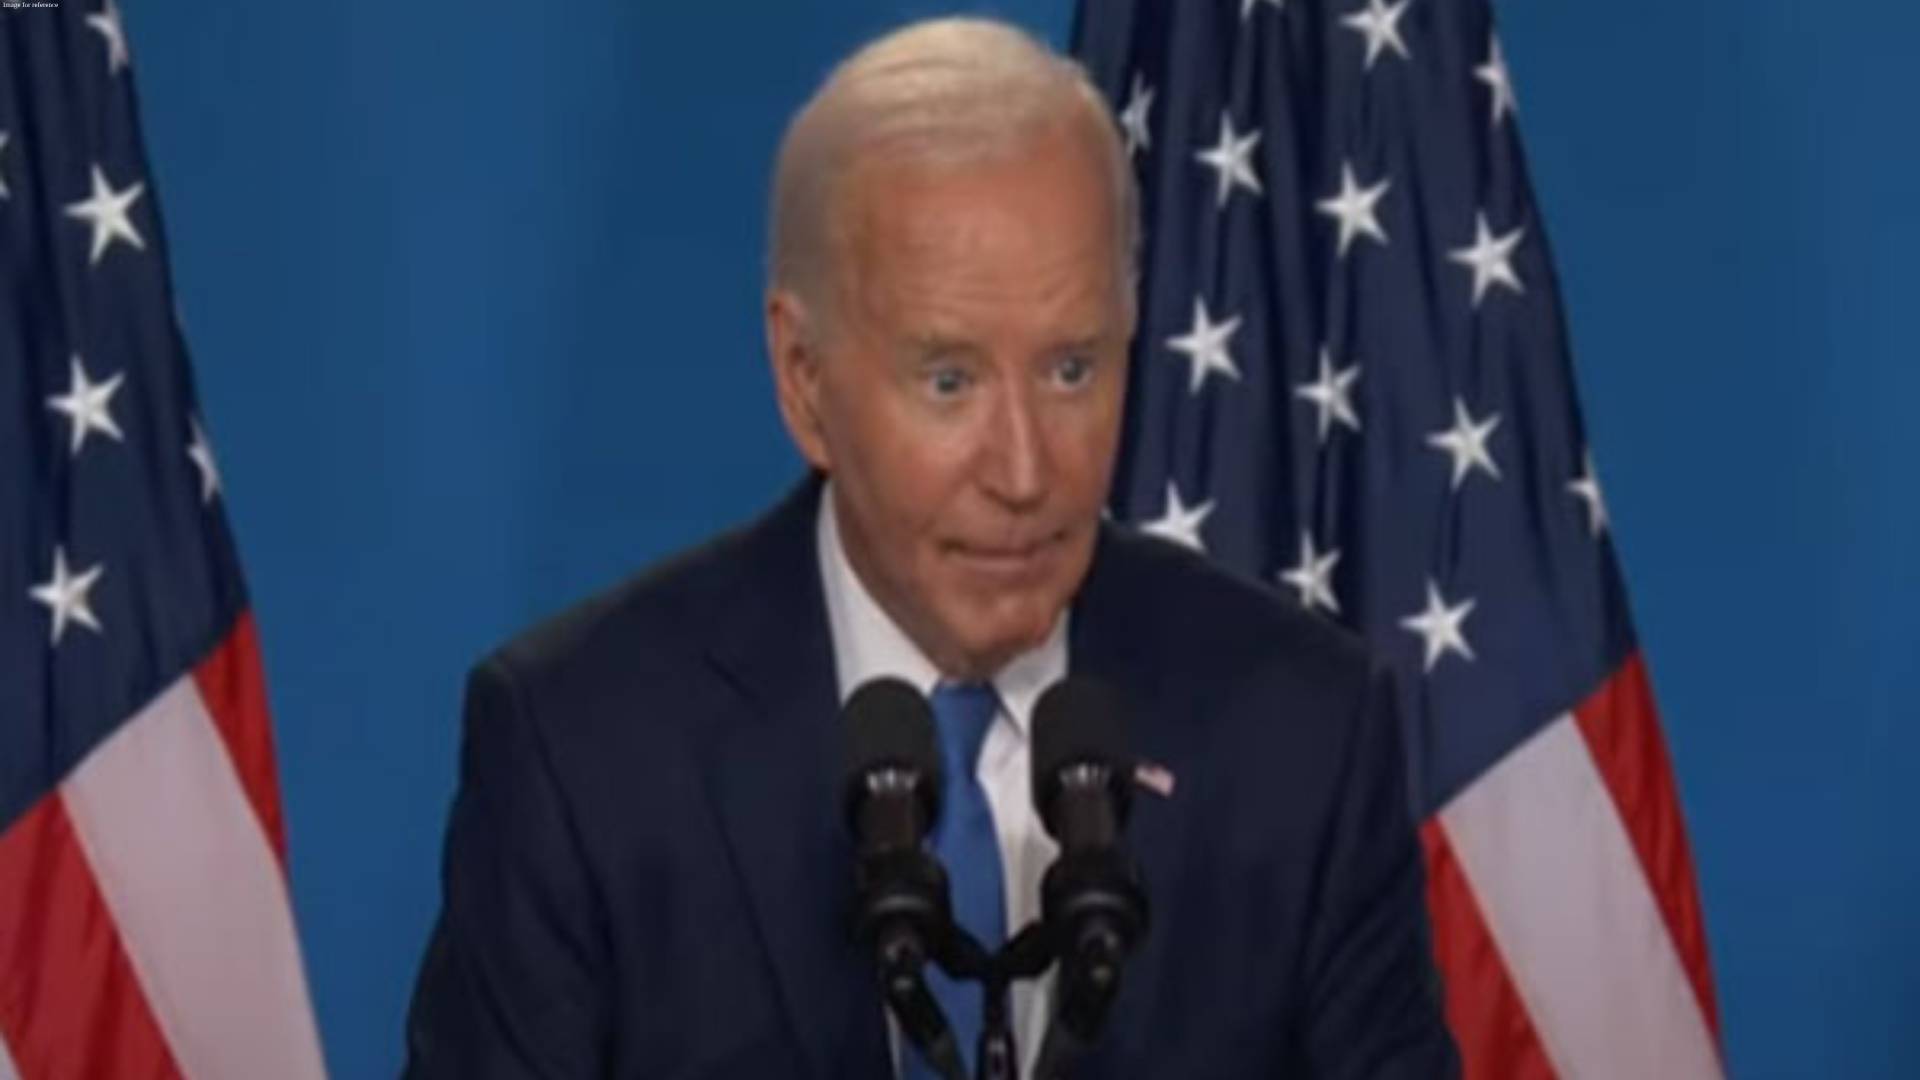 US President Joe Biden defends himself after introducing Zelenskyy as Putin